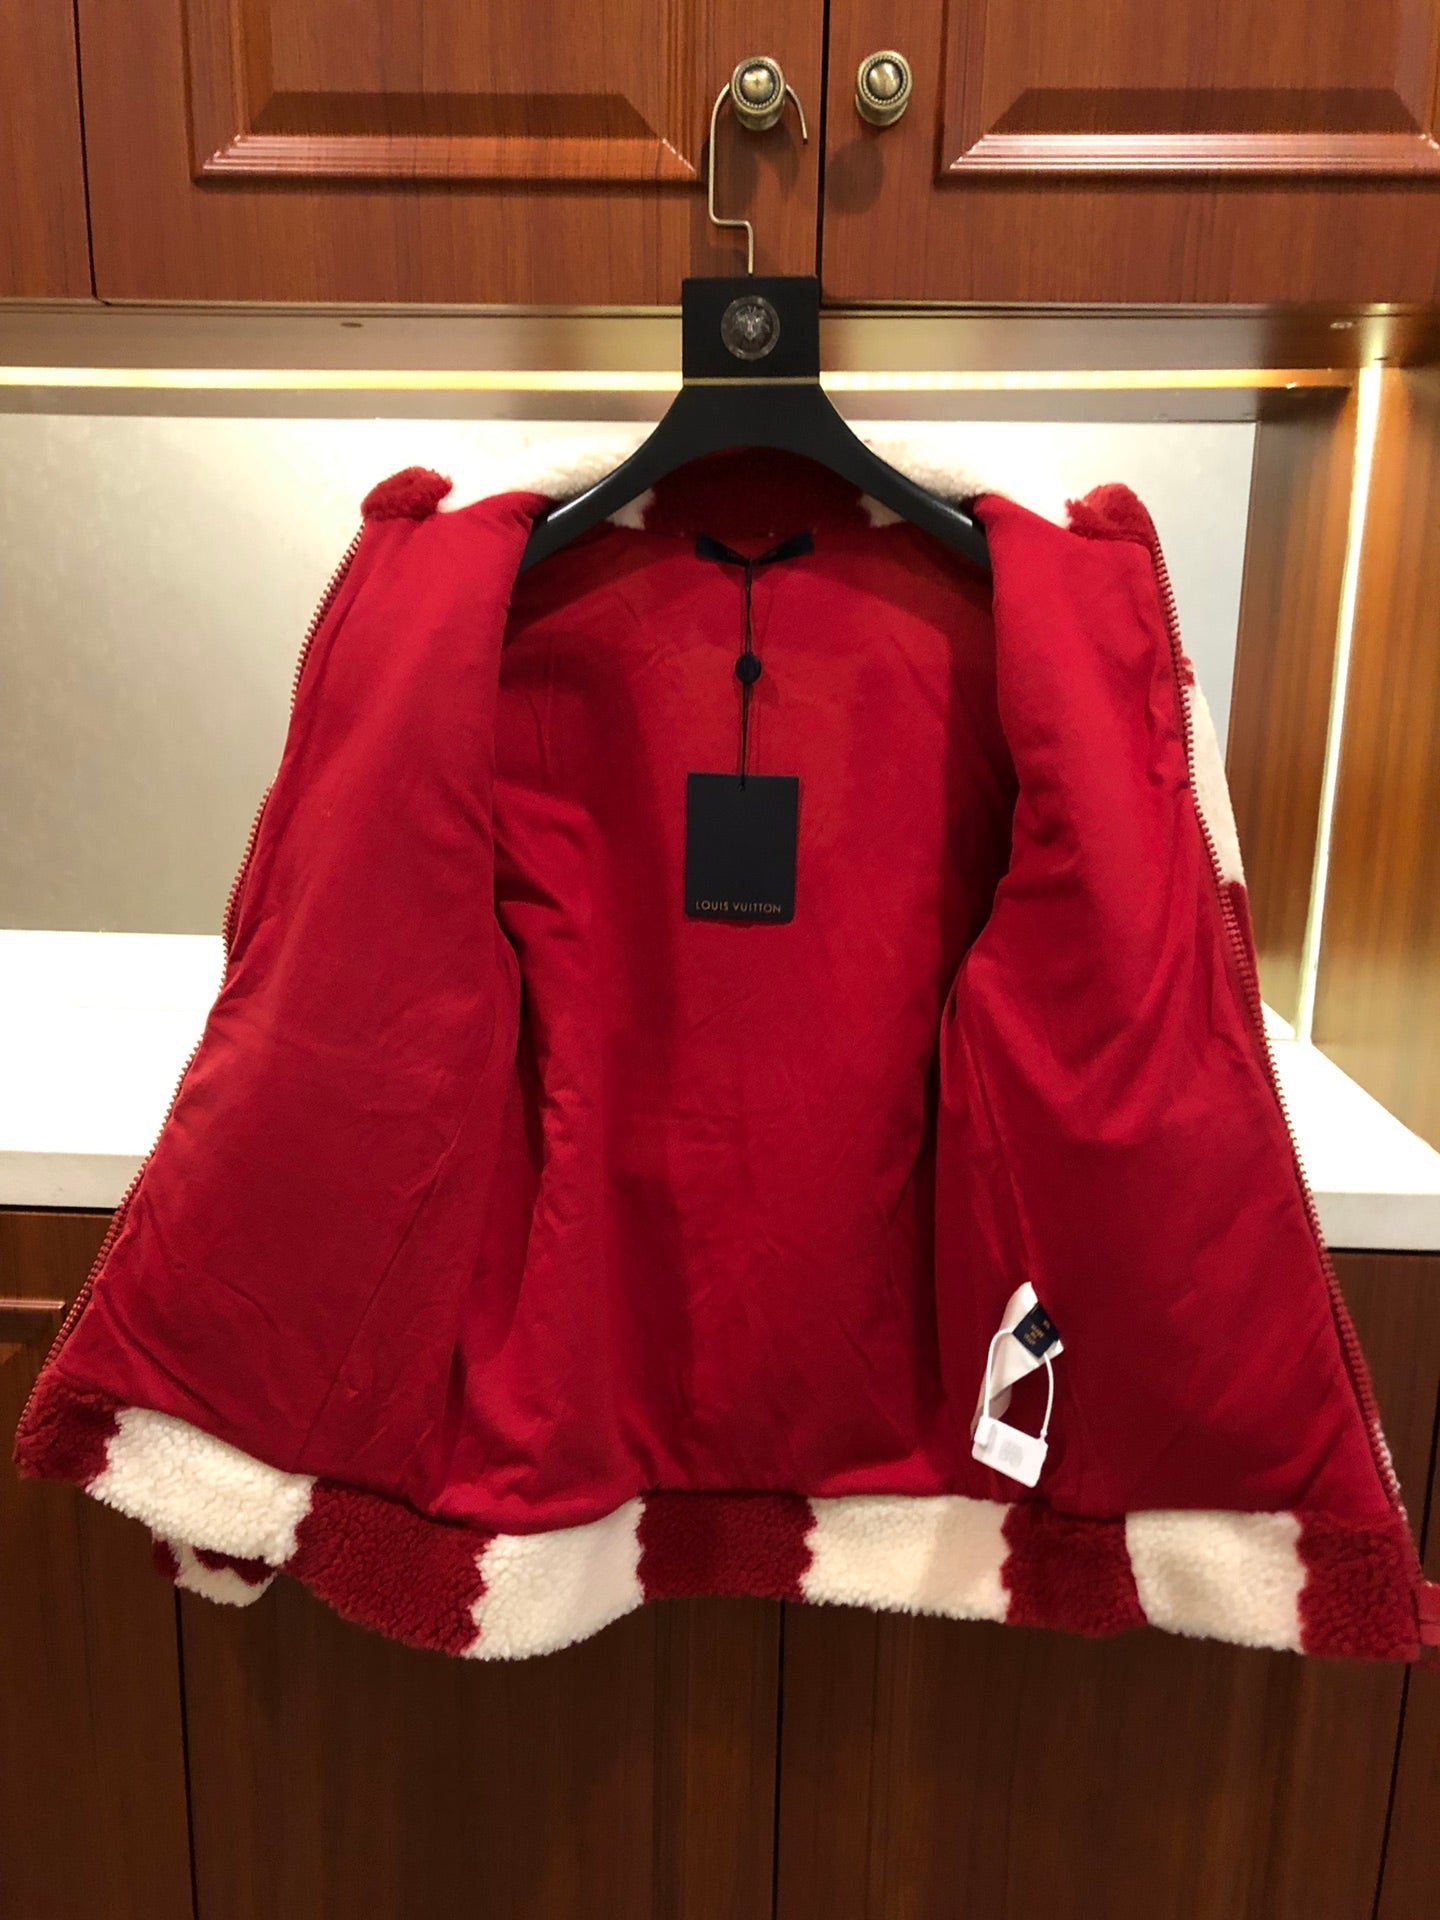 Louis Vuitton x Nigo Jacquard Damier Fleece Blouson Garnet Red